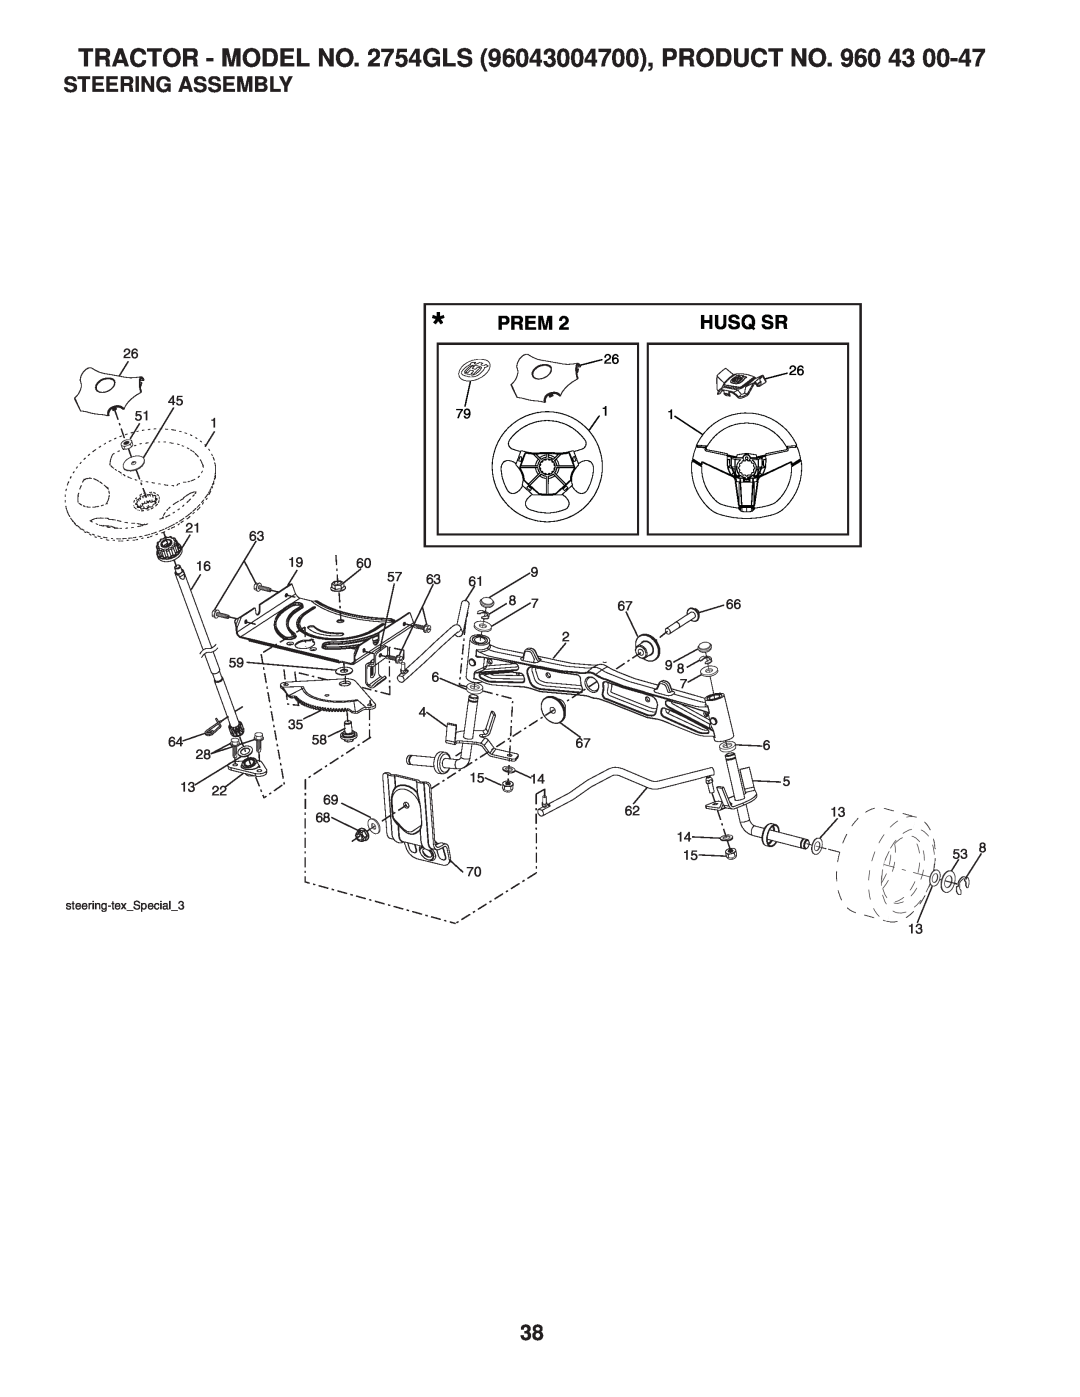 Husqvarna 2754 GLS manual Steering Assembly, TRACTOR - MODEL NO. 2754GLS 96043004700, PRODUCT NO. 960, Prem, Husq Sr 